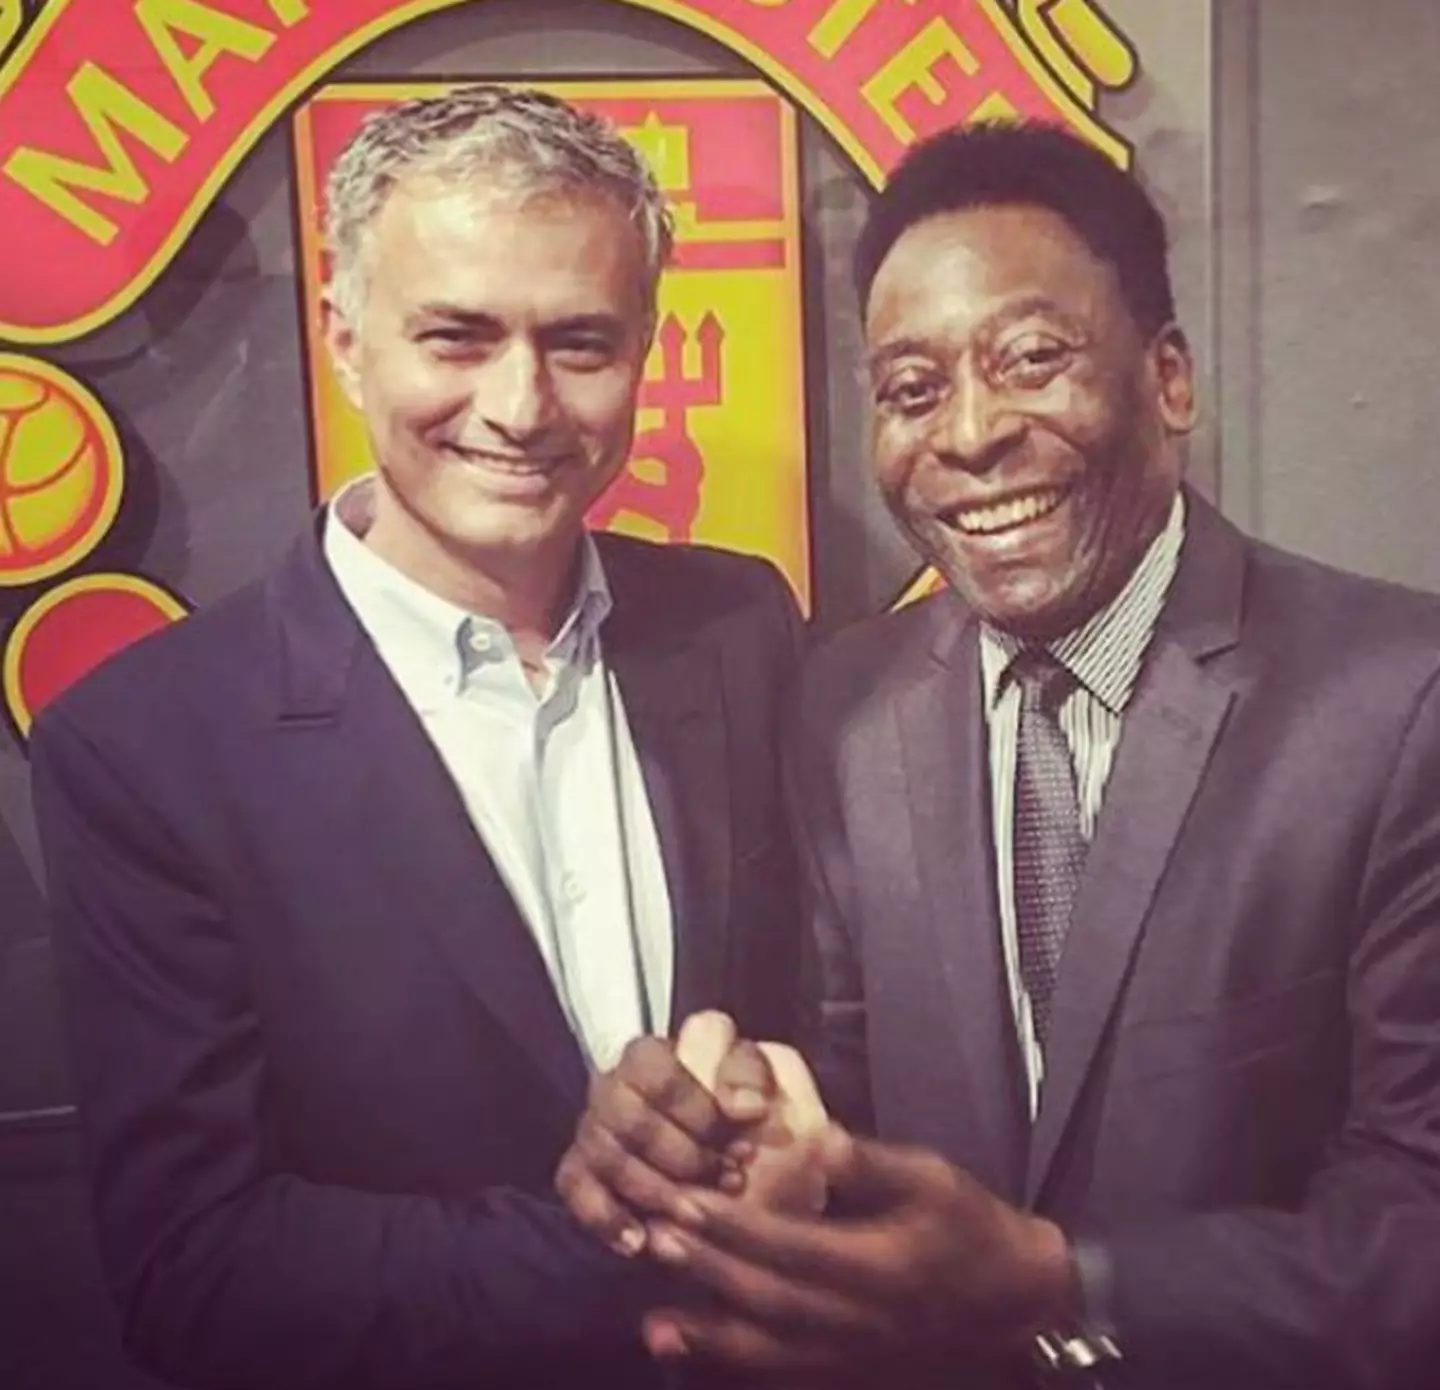 Jose Mourinho pictured alongside Pele. Image: Instagram/Jose Mourinho 